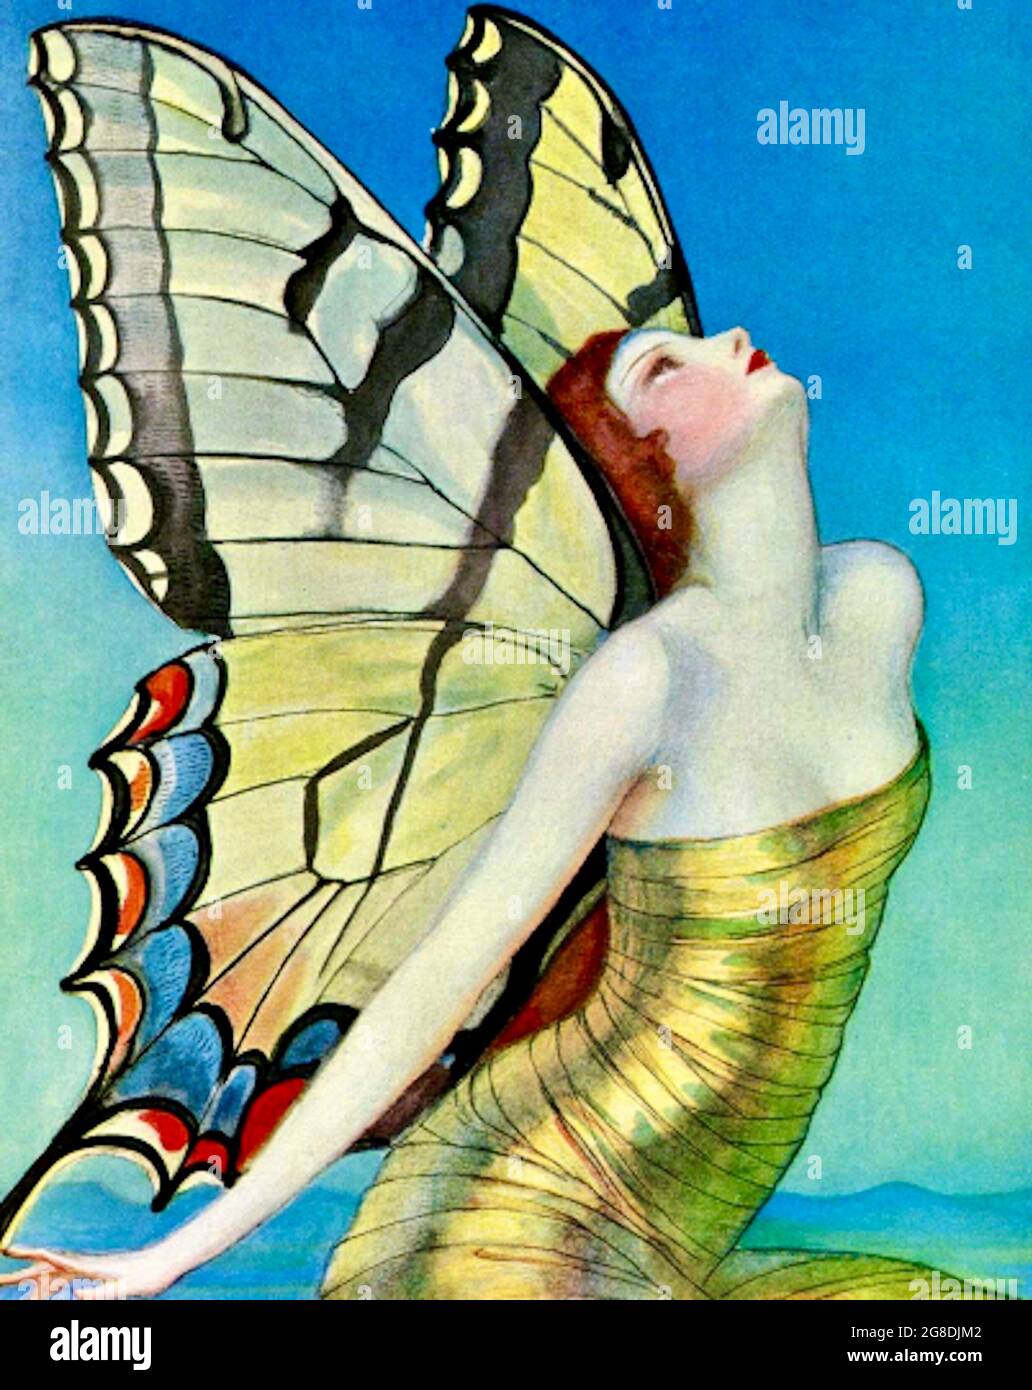 Władysław Teodor Benda artwork entitled Yellow Angel - Woman with battery wings. Stock Photo